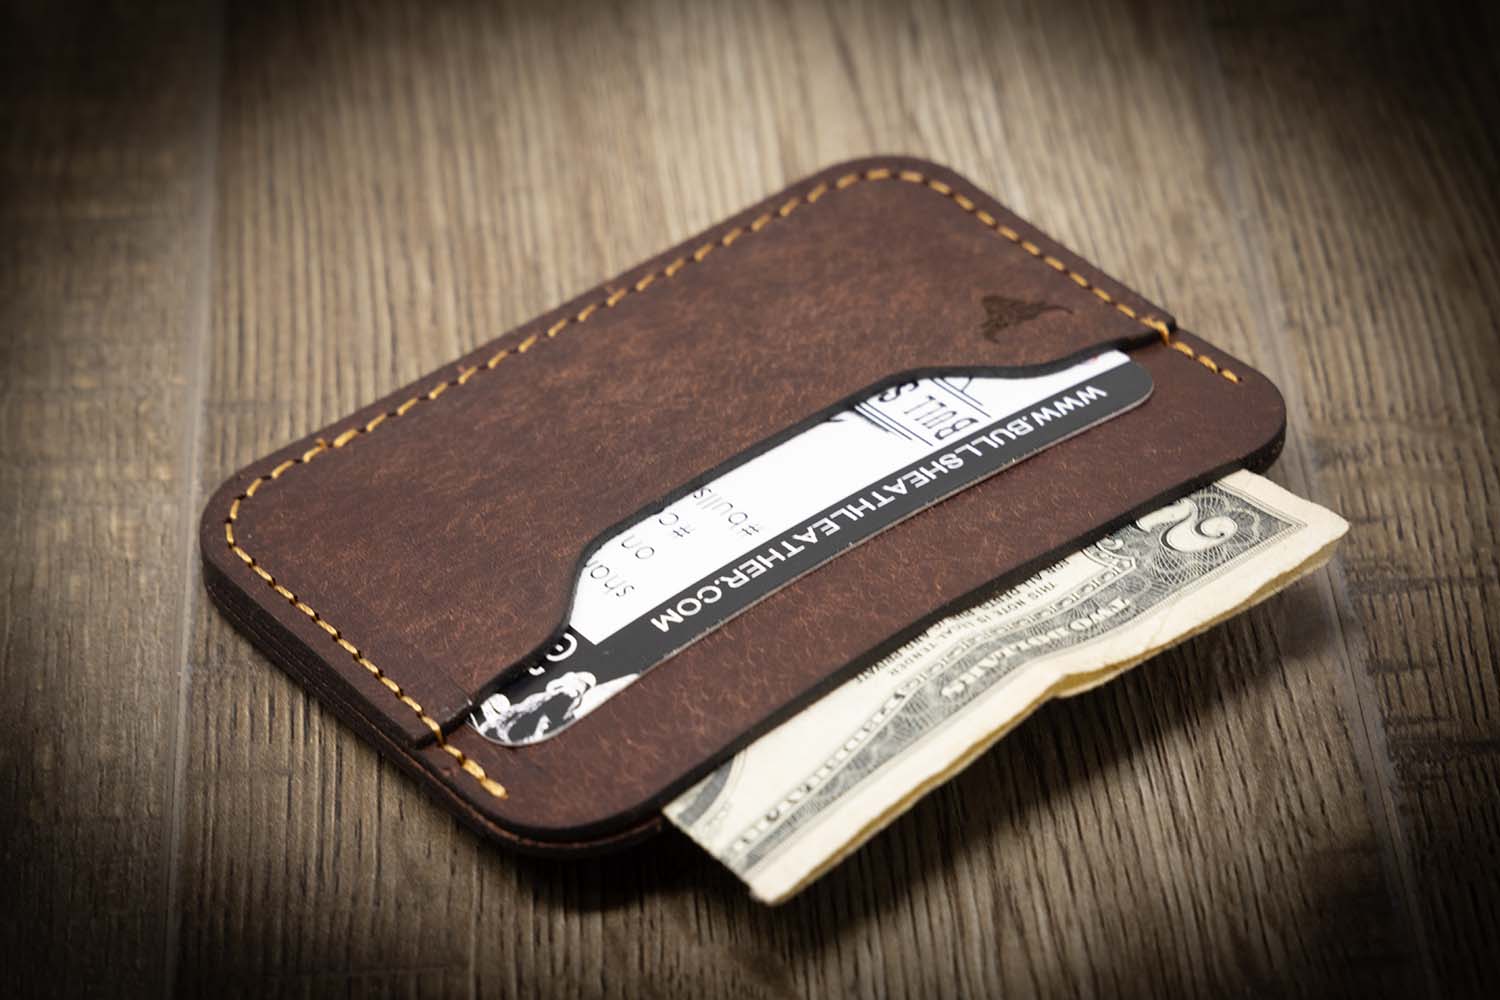 Leatherology Brown Men's Slim Credit Card Case Wallet - RFID Available